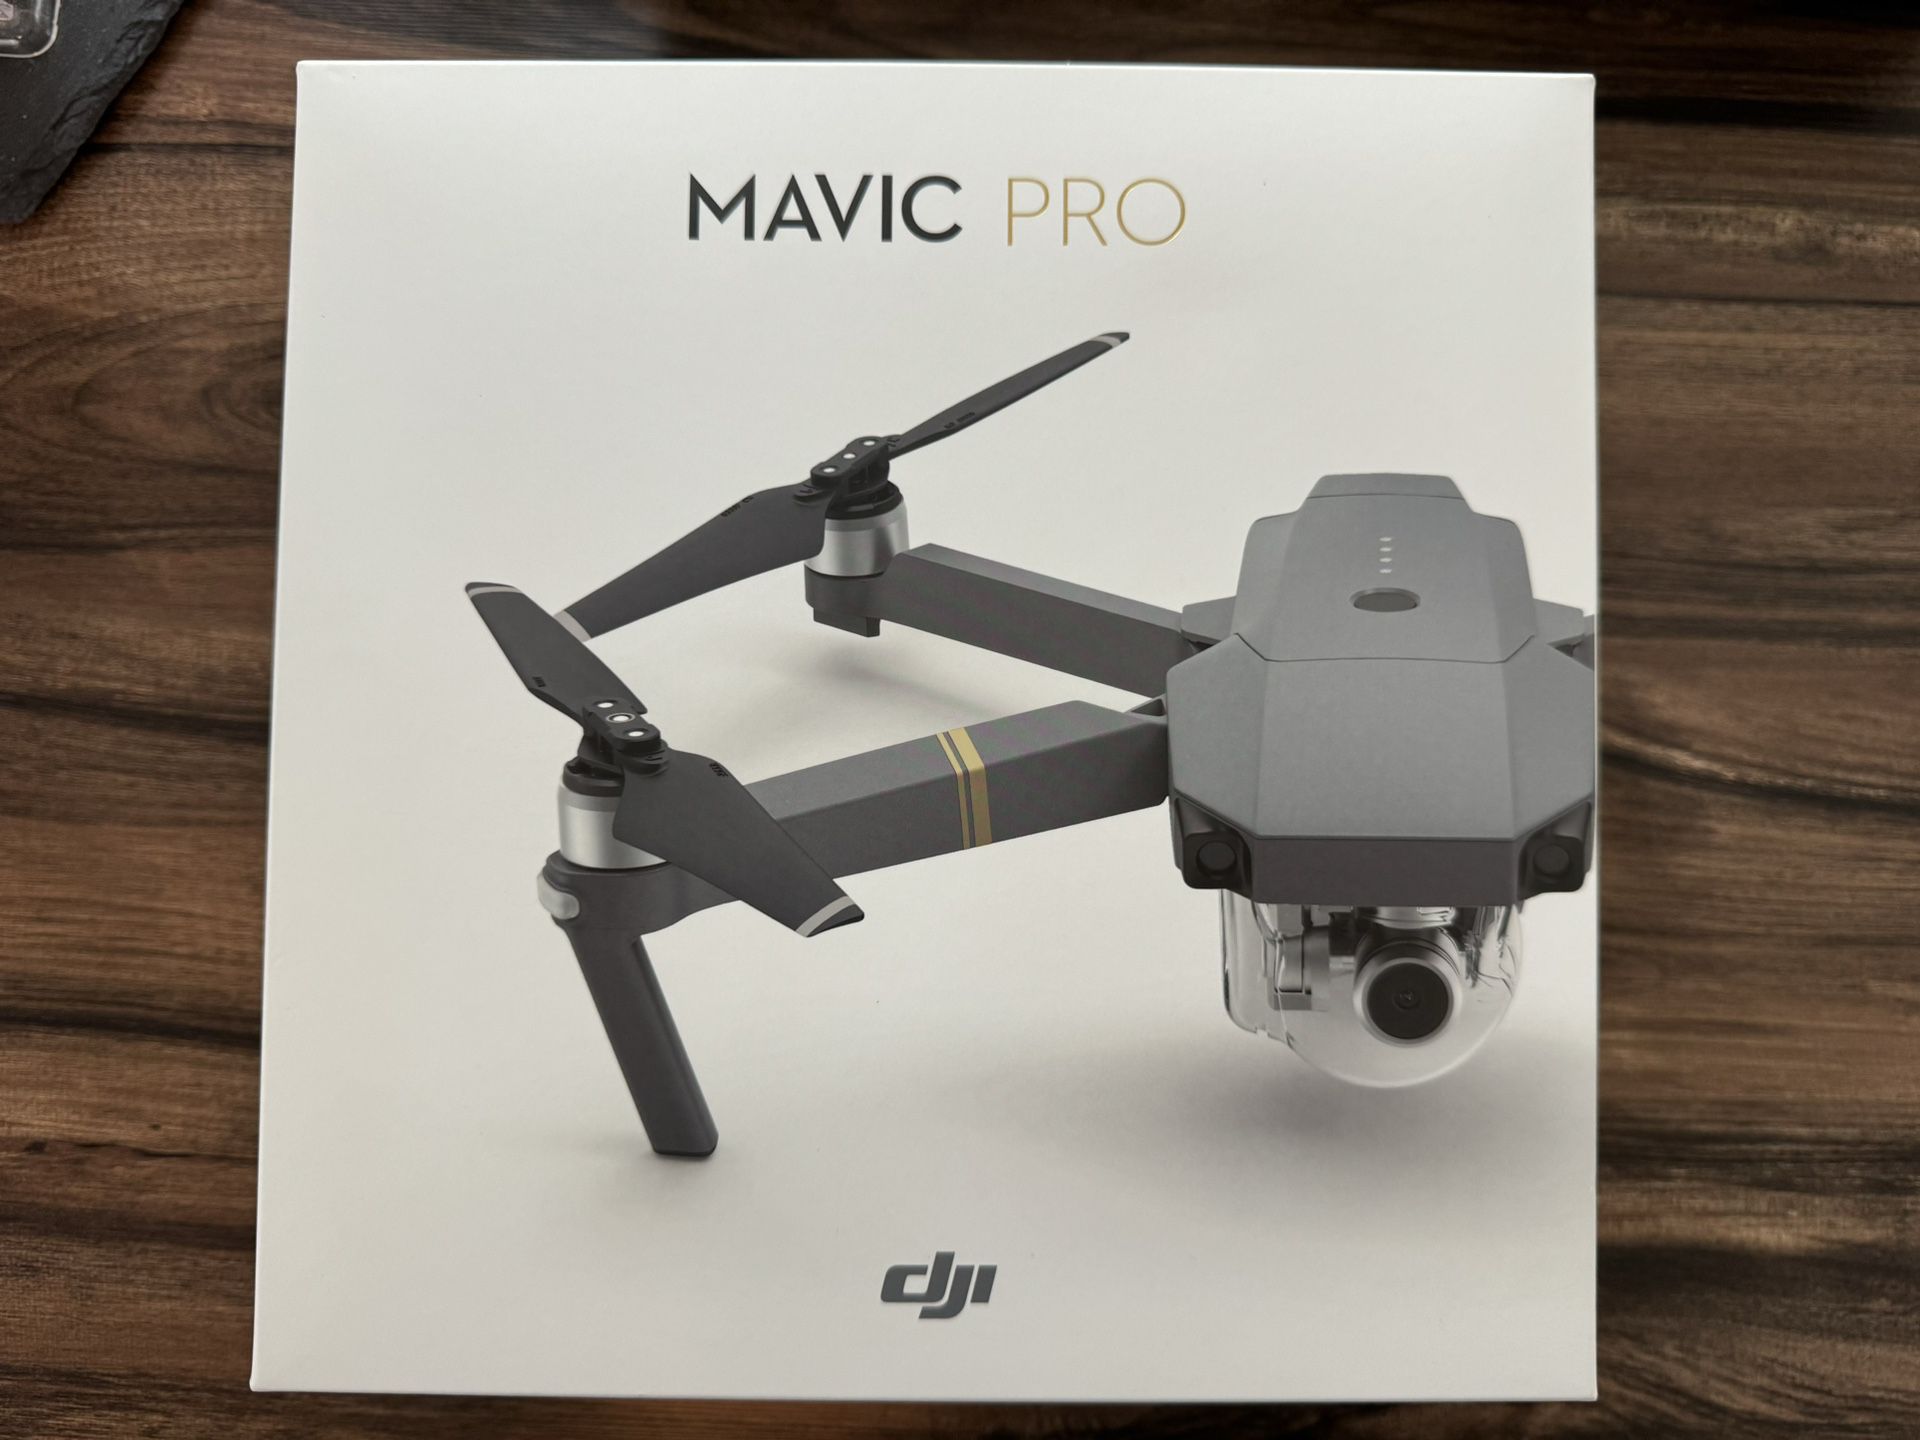 NEW DJI - Mavic Pro Quadcopter with Remote Controller - Gray